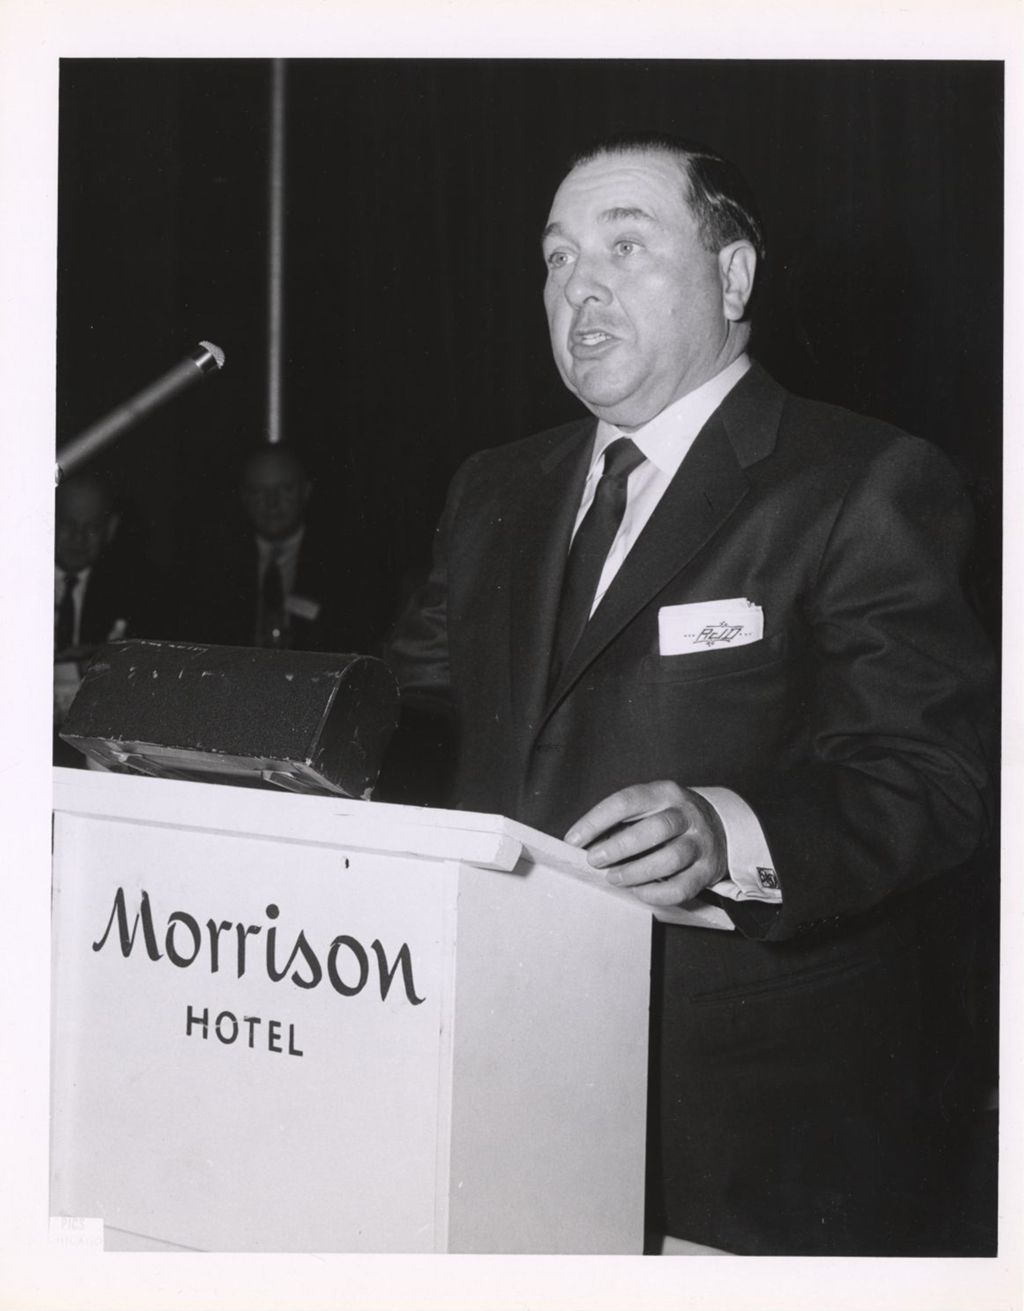 Richard J. Daley speaking at the Morrison Hotel